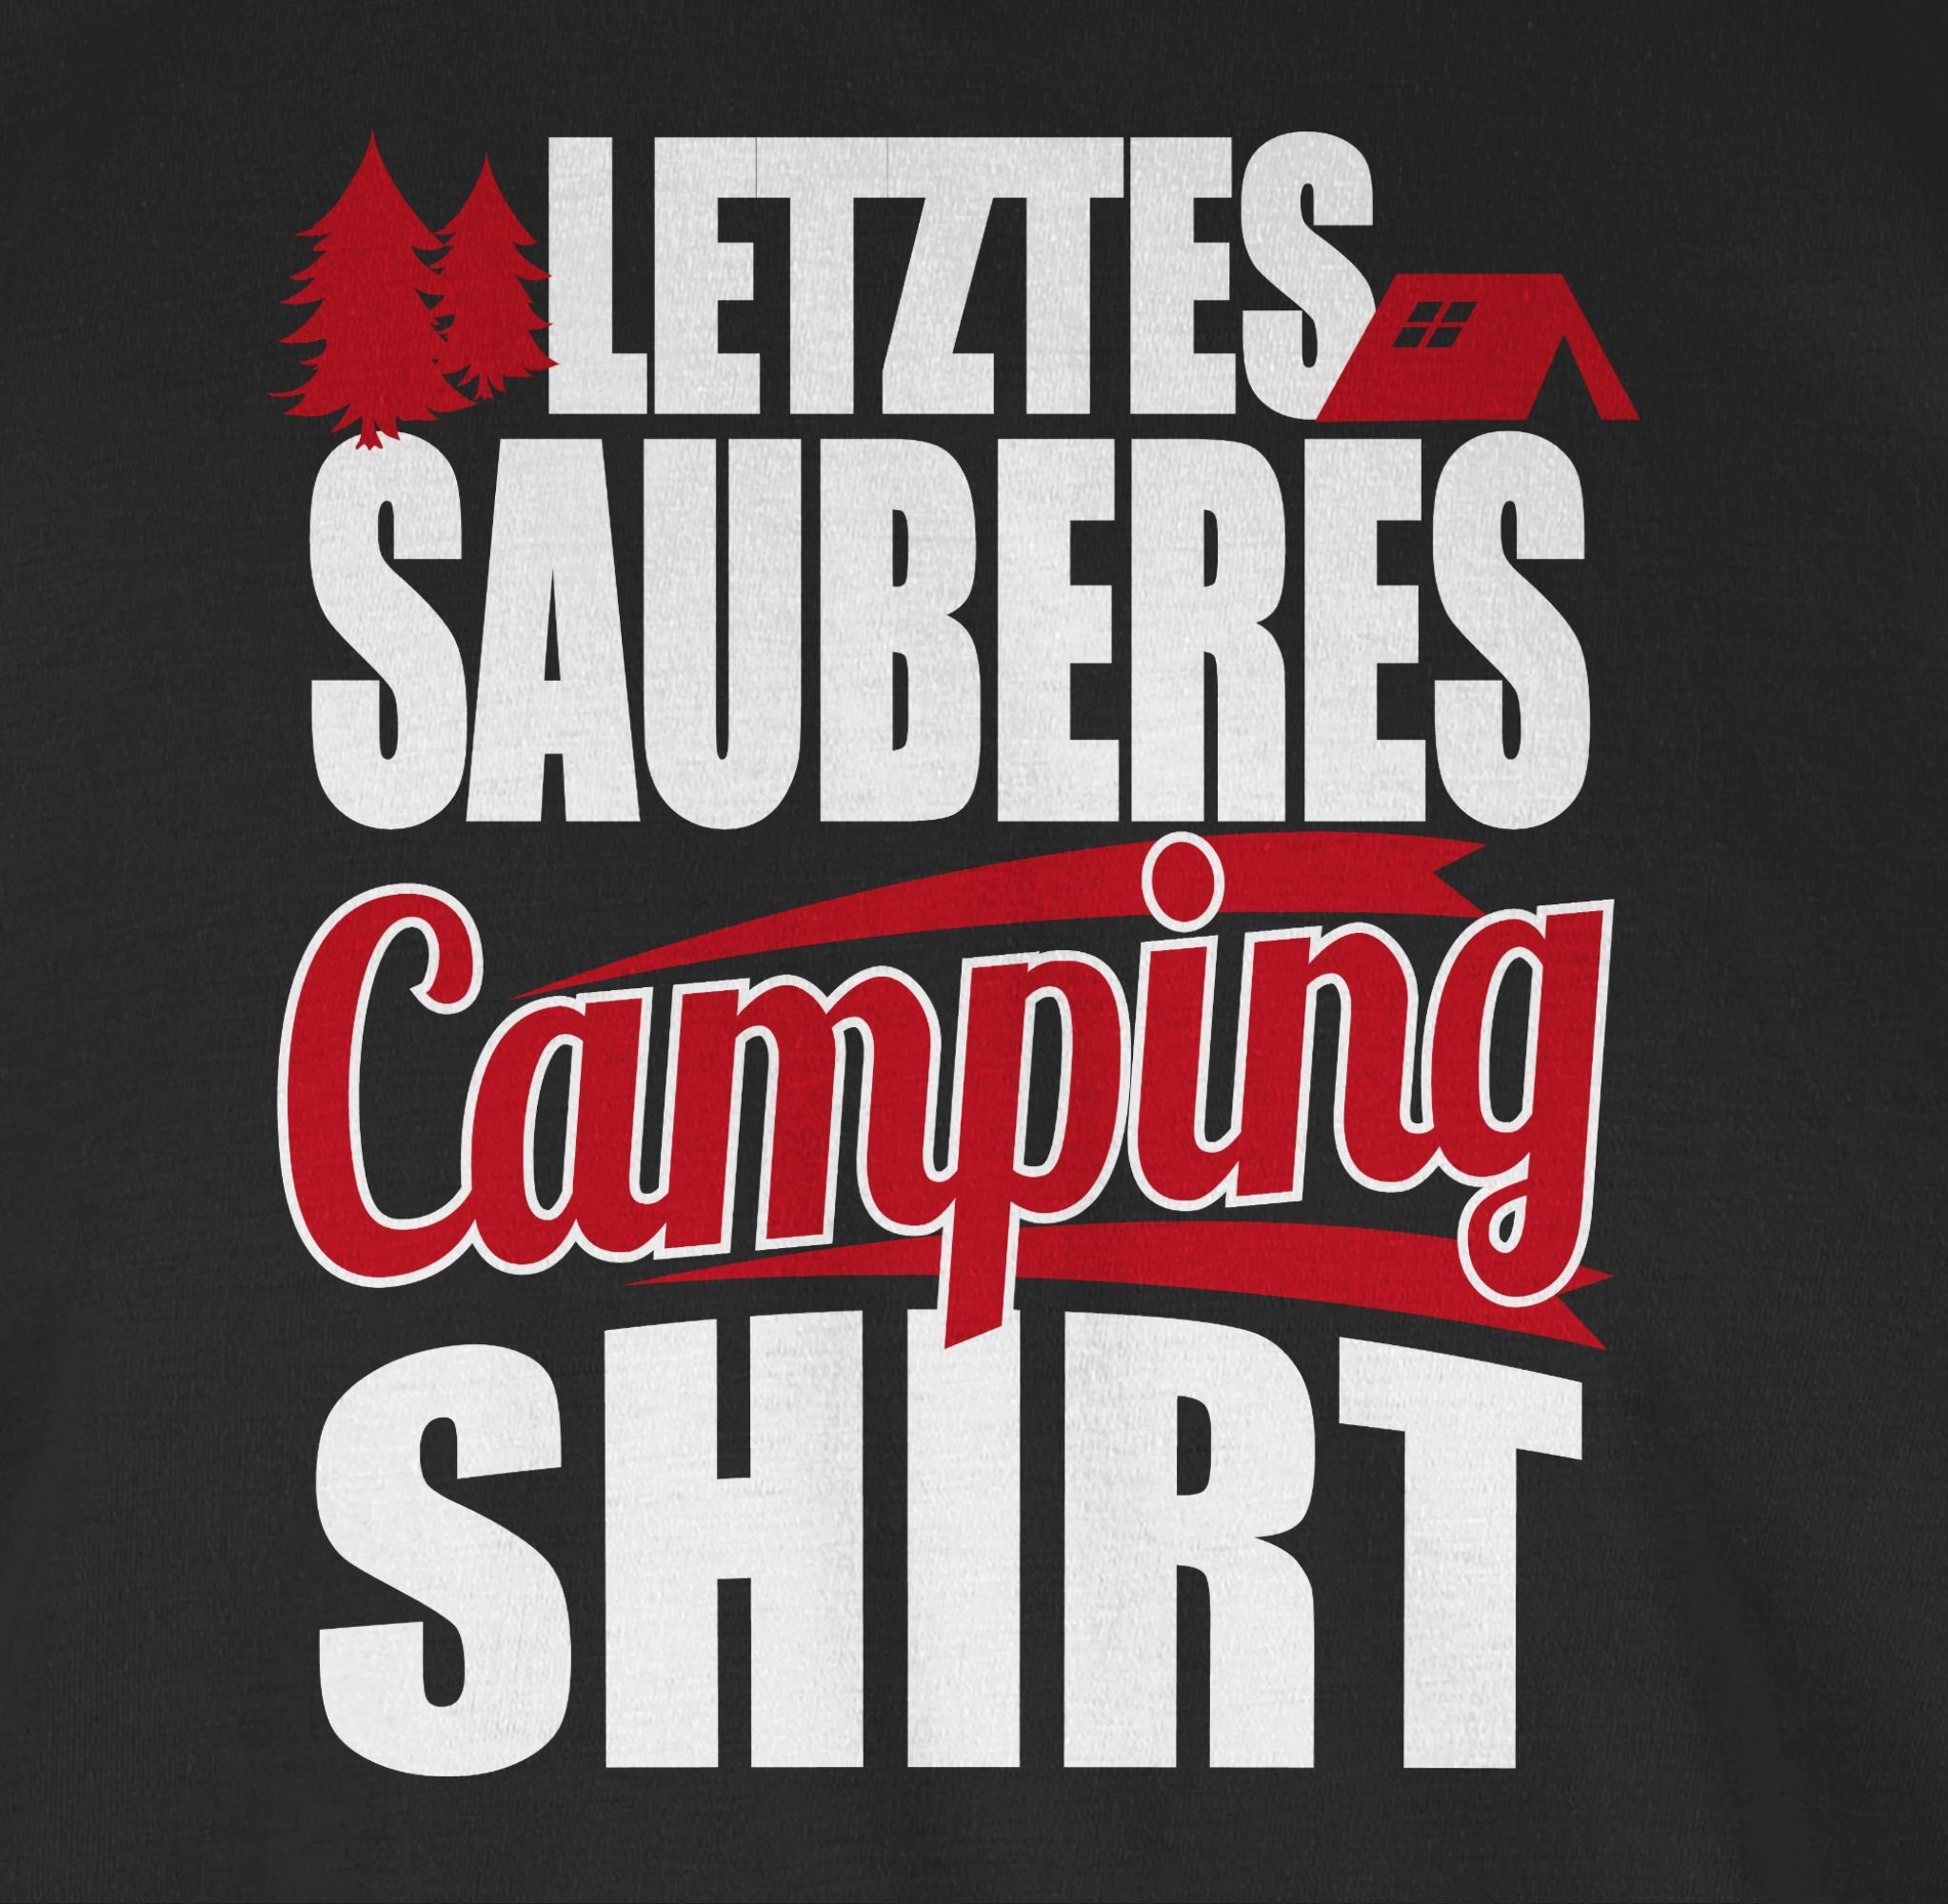 Shirtracer T-Shirt Letztes sauberes Camping Hobby Shirt Outfit 1 Schwarz